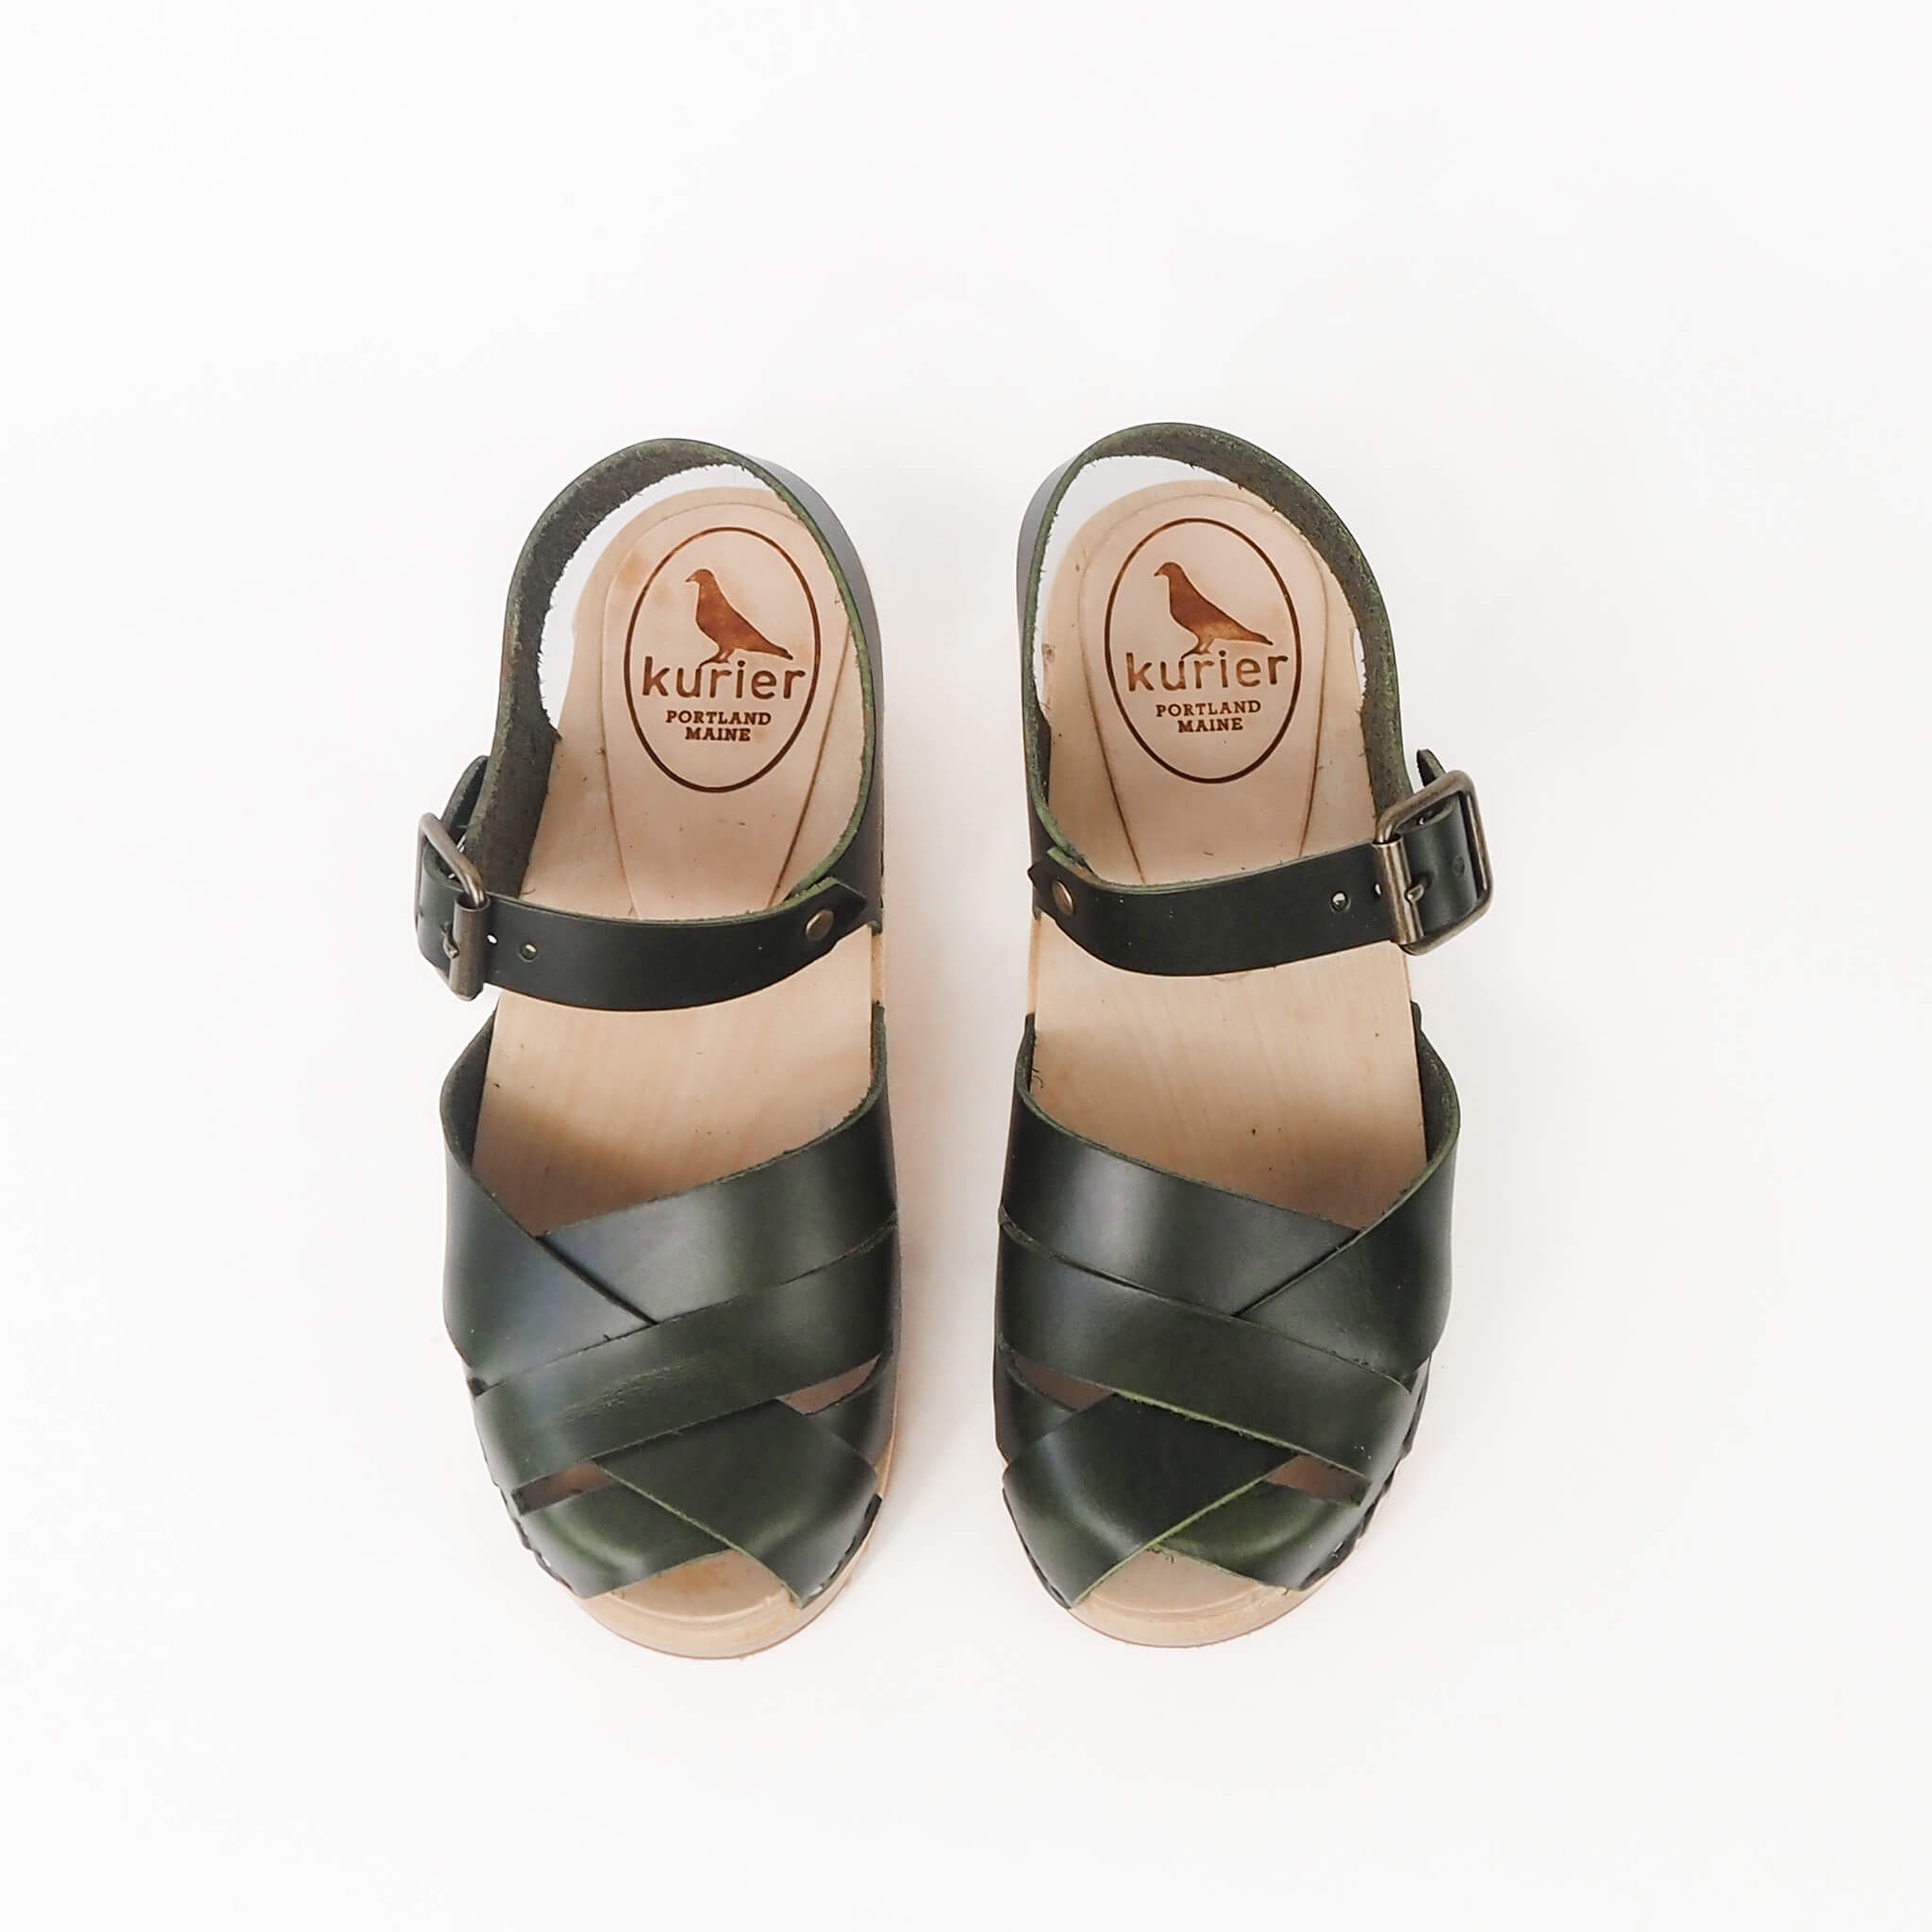 emelia clog low heel peep toe mary janesandal handmade american leather wood - pine top view